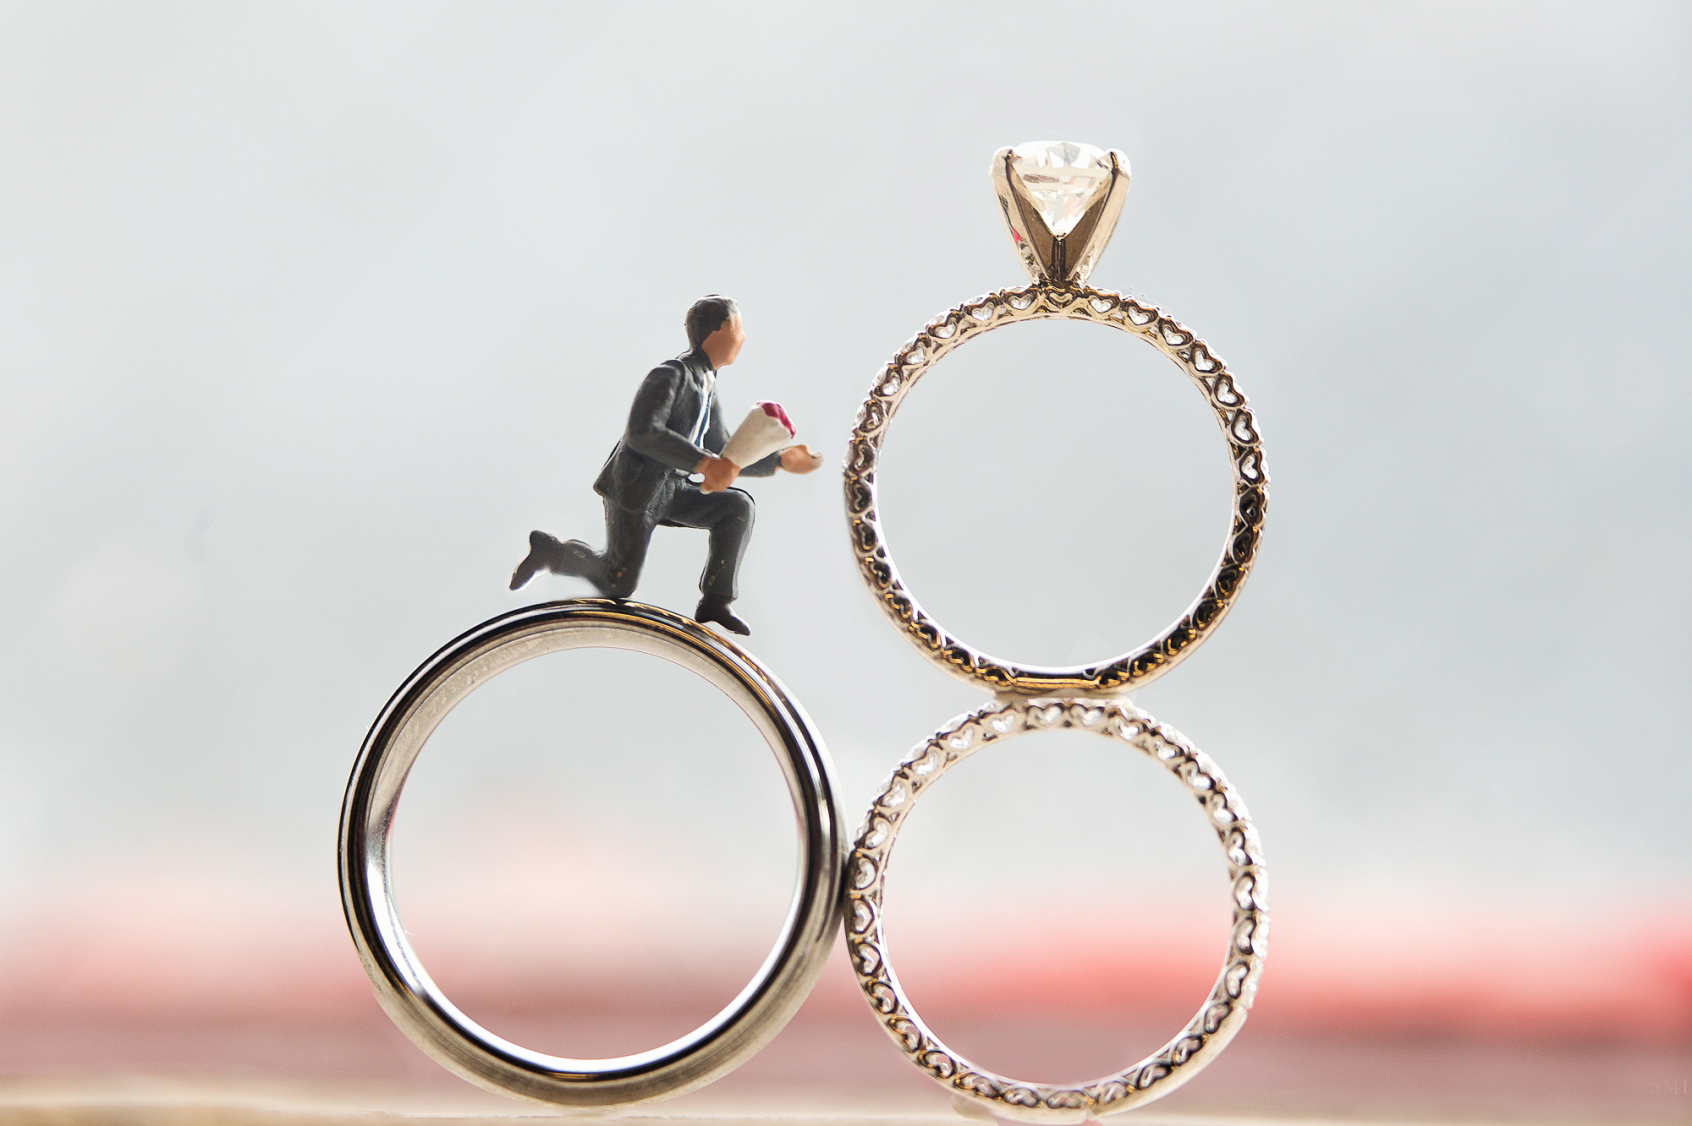 Tiny figurine on wedding rings proposing